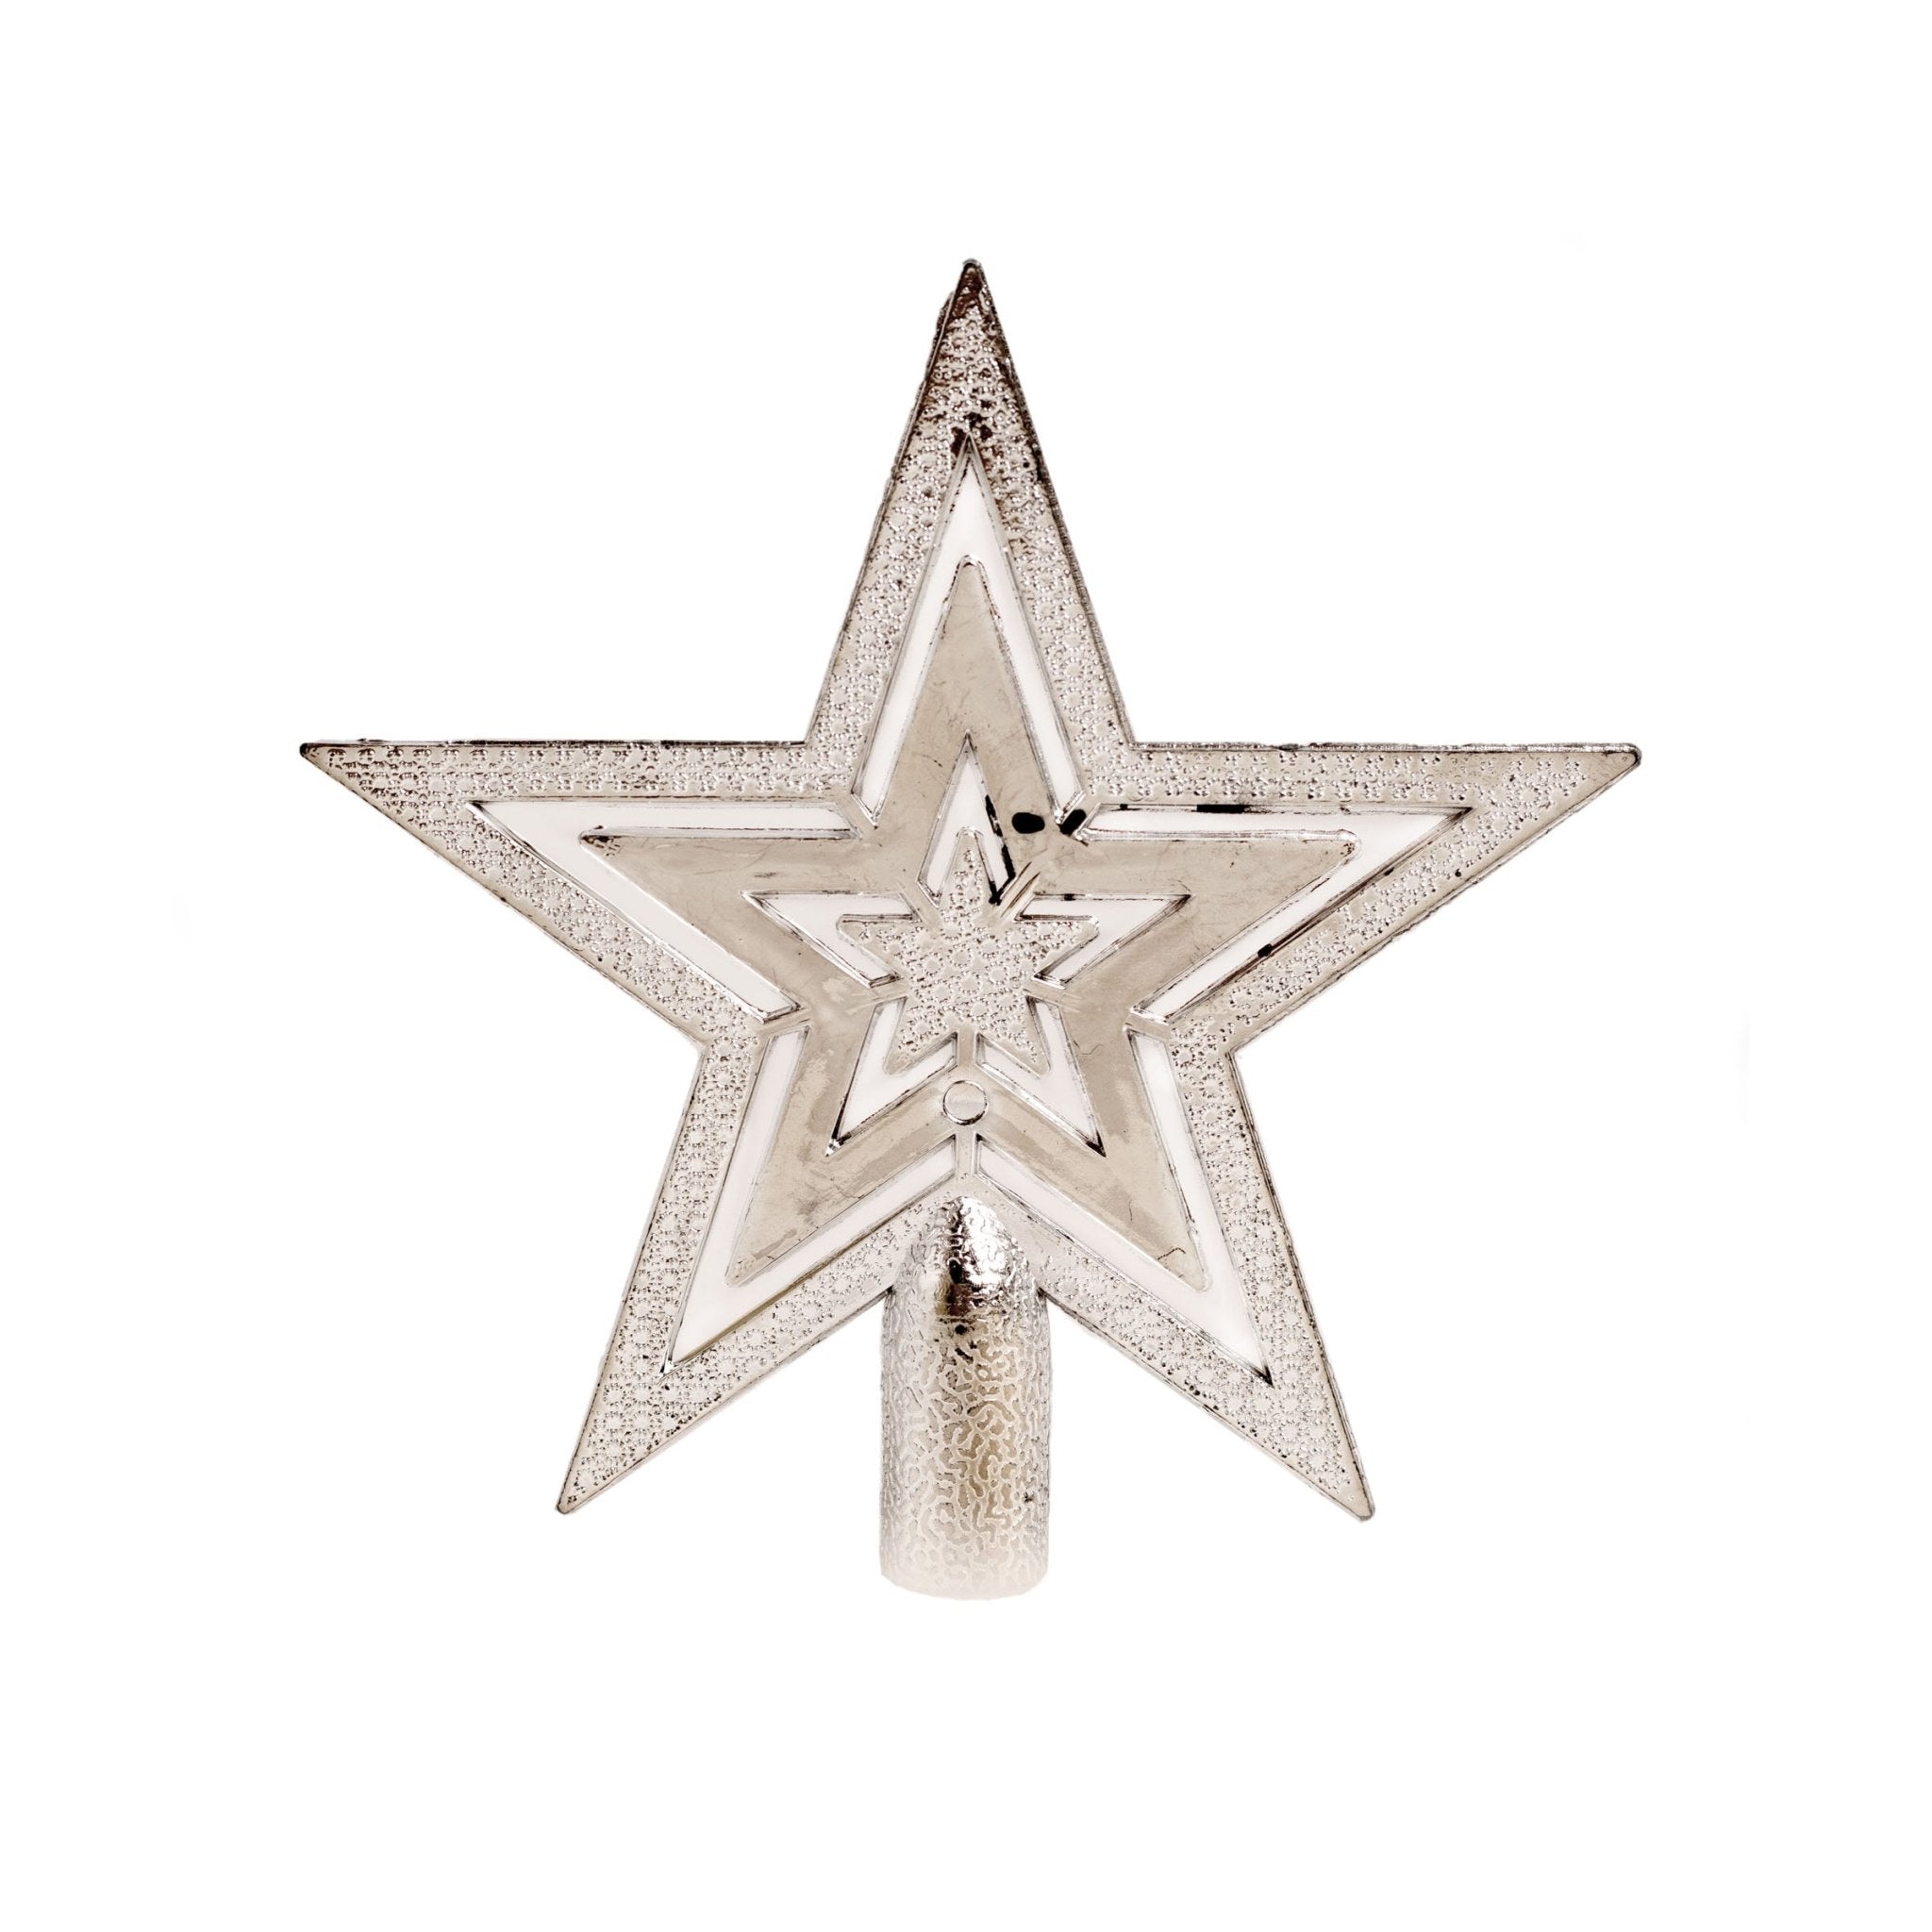 10cm 5 Pointed Star Tree Topper Silver - MODA FLORA Santa's Workshop